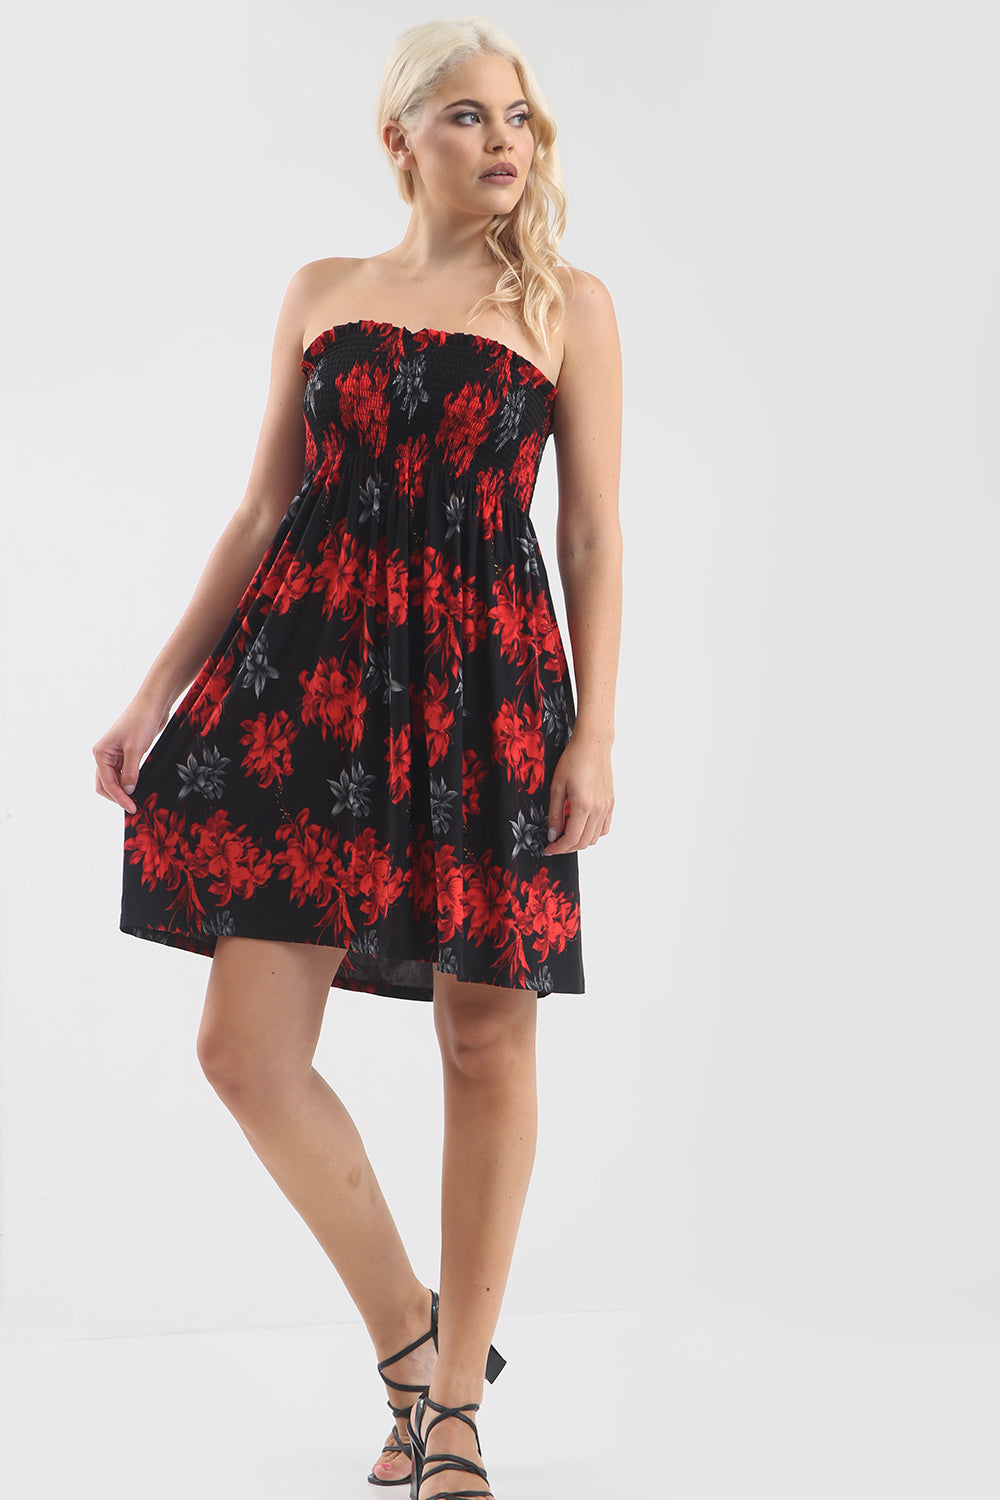 Sheered Bardot Red Floral Mini Swing Dress - bejealous-com